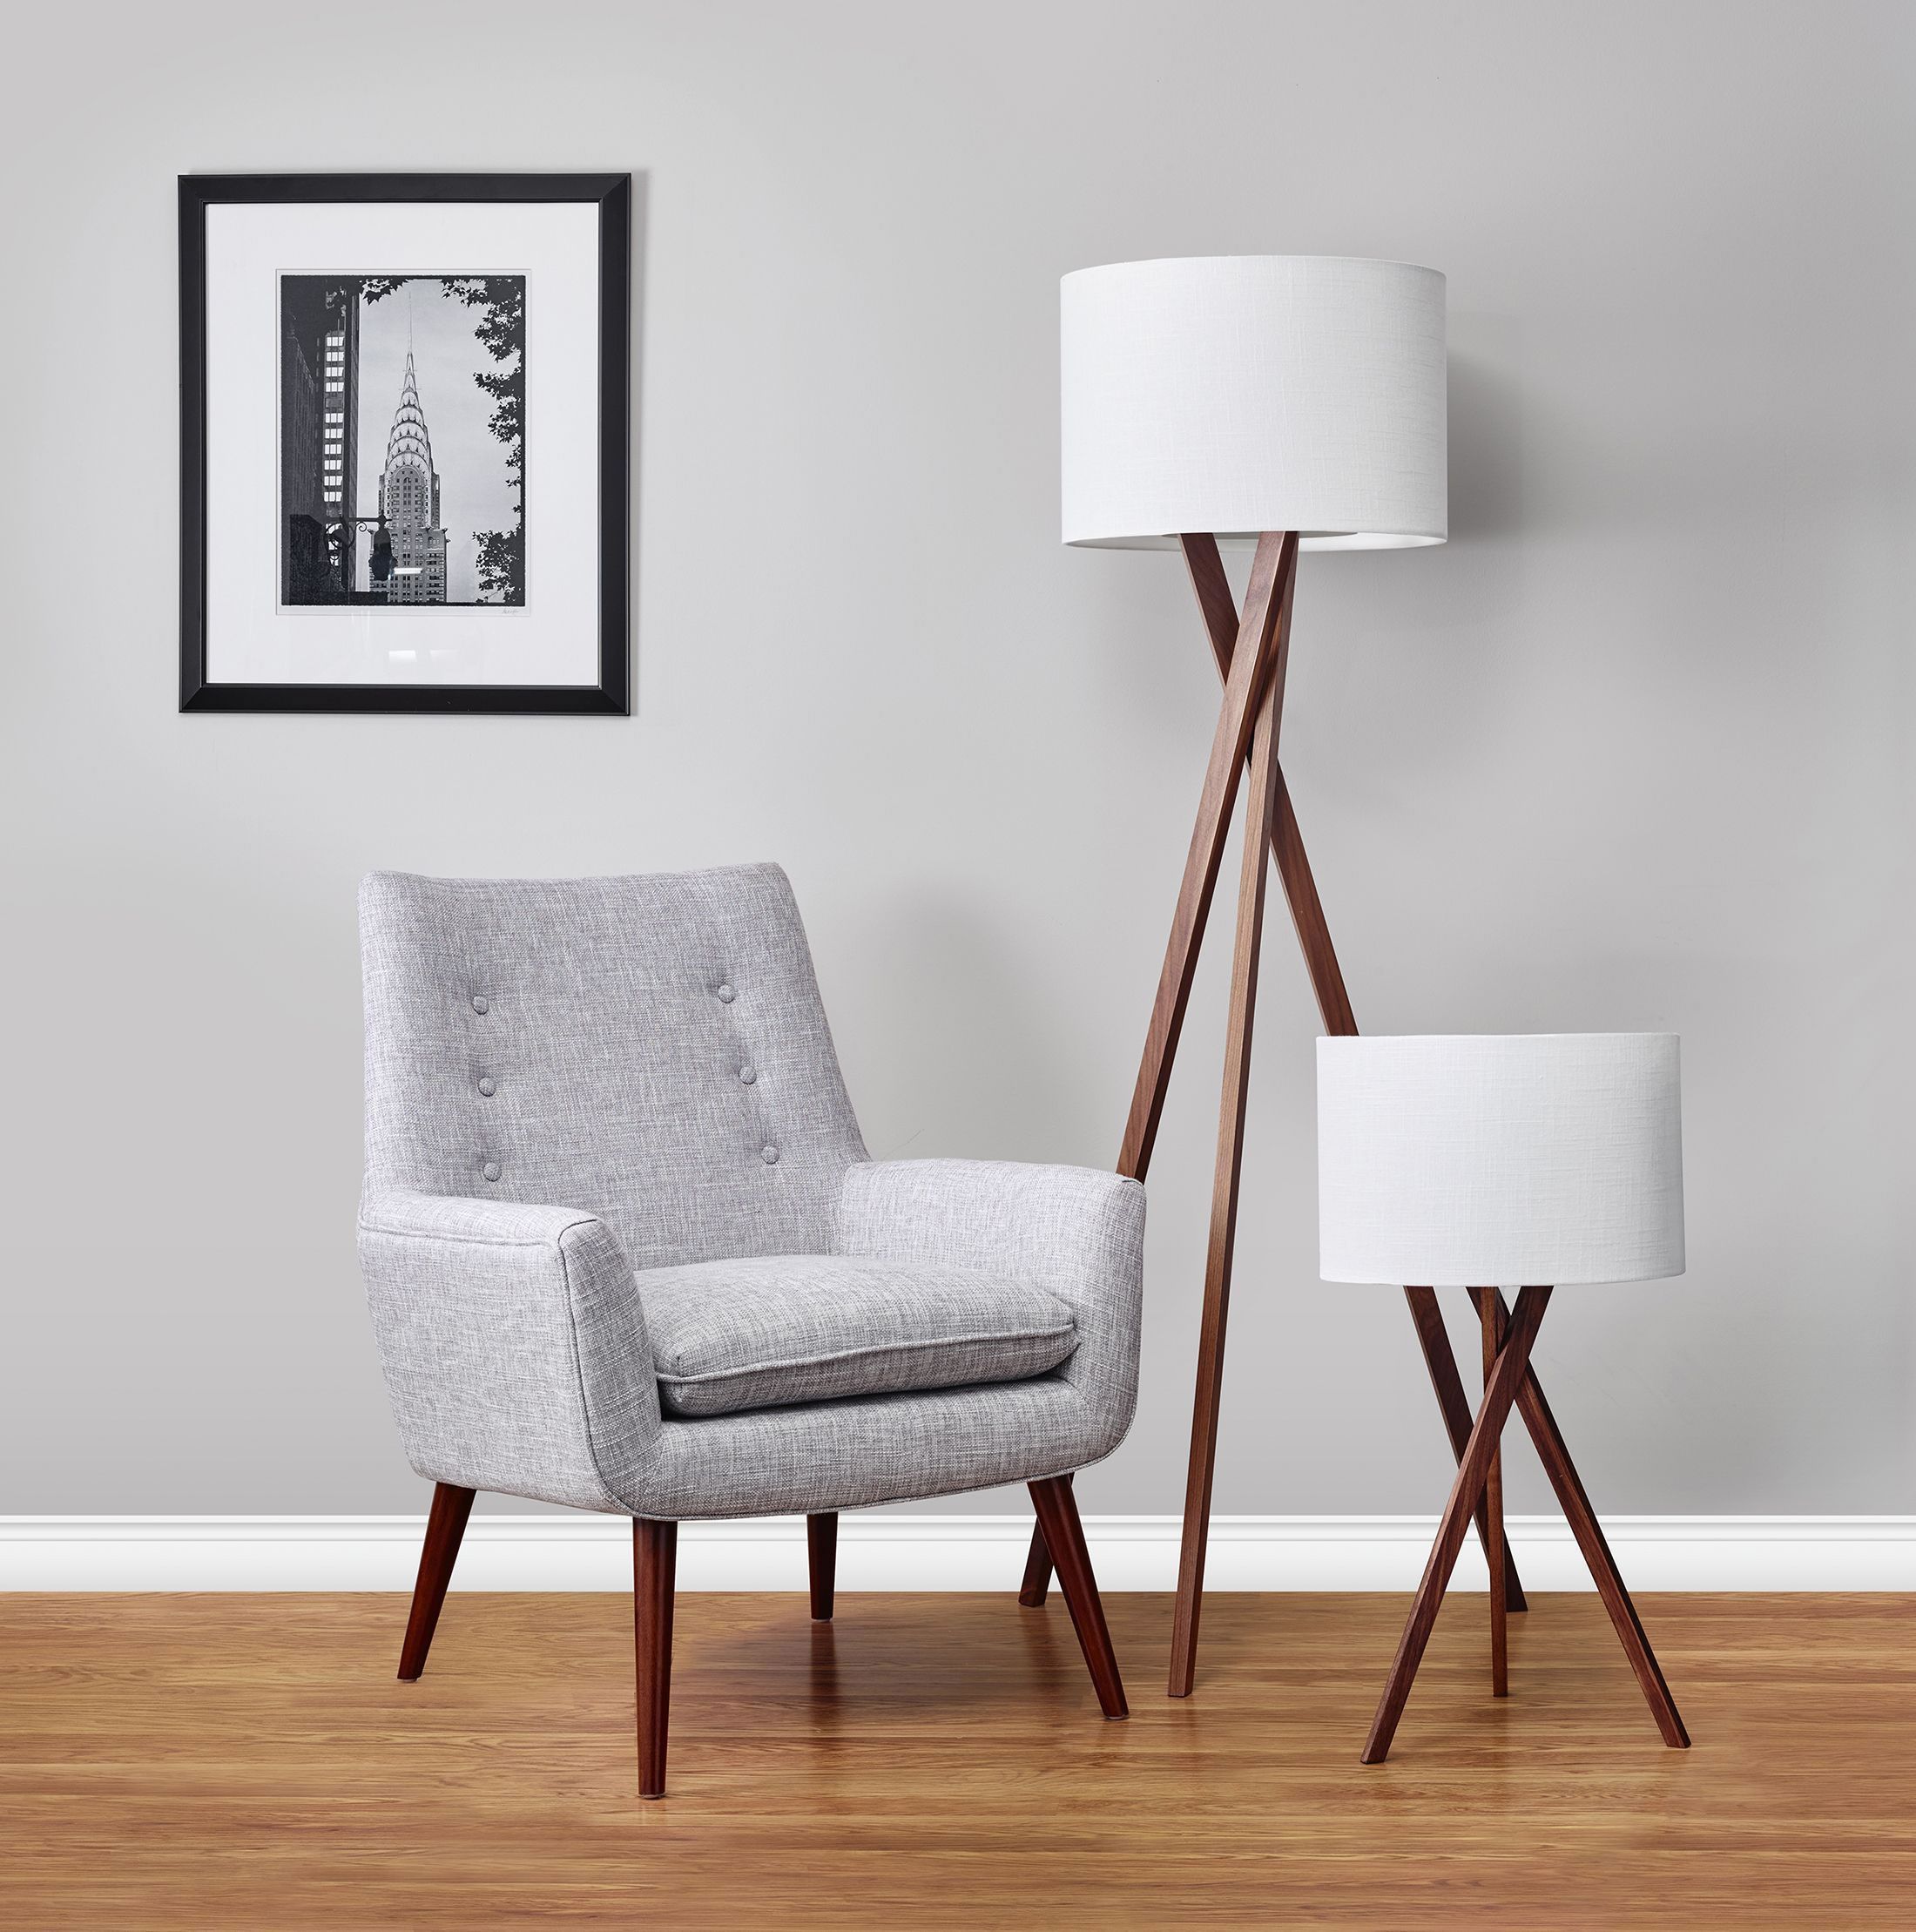 Adesso Brooklyn Floor Lamp (walnut) – Ad 3227 15 | Modern Furniture Canada Regarding Walnut Floor Lamps (View 10 of 15)